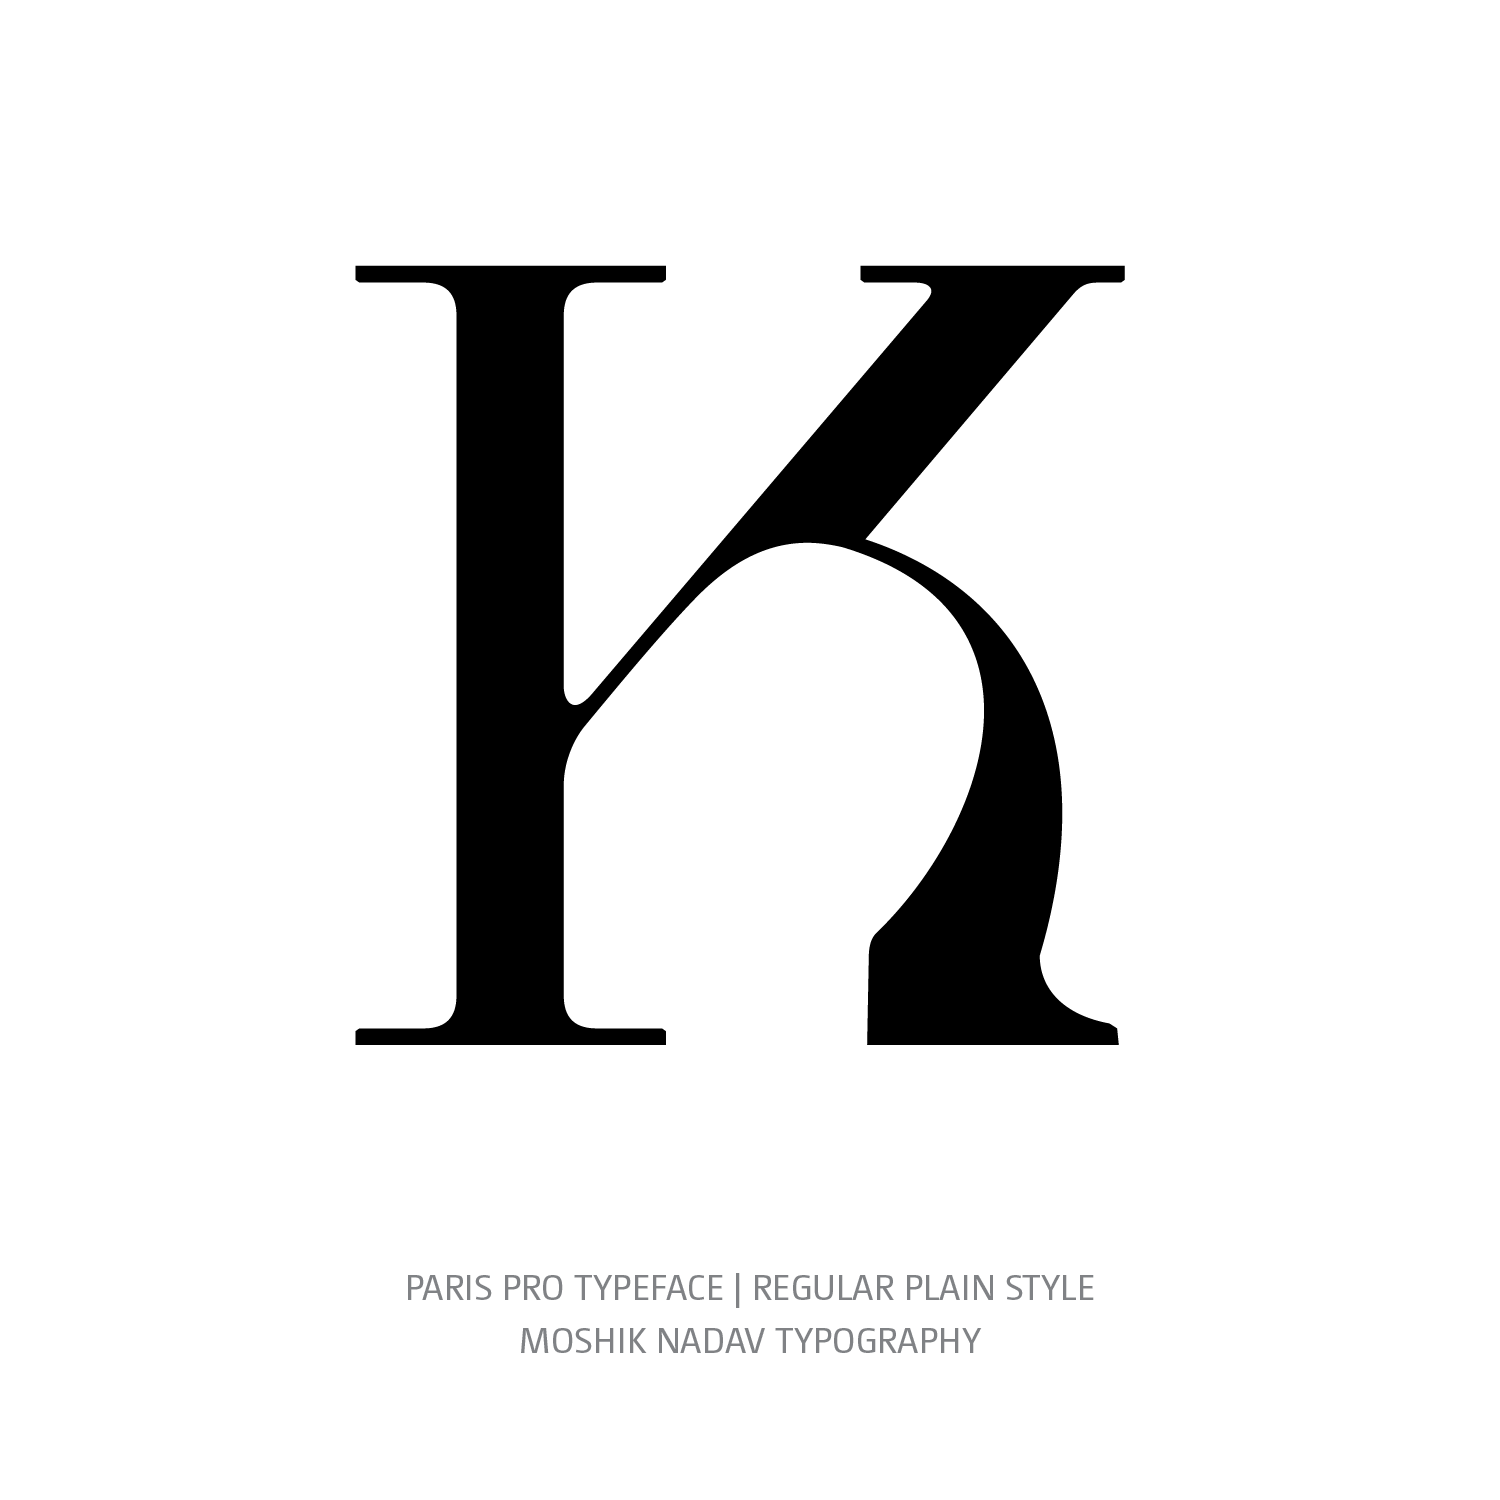 Paris Pro Typeface Regular Plain K